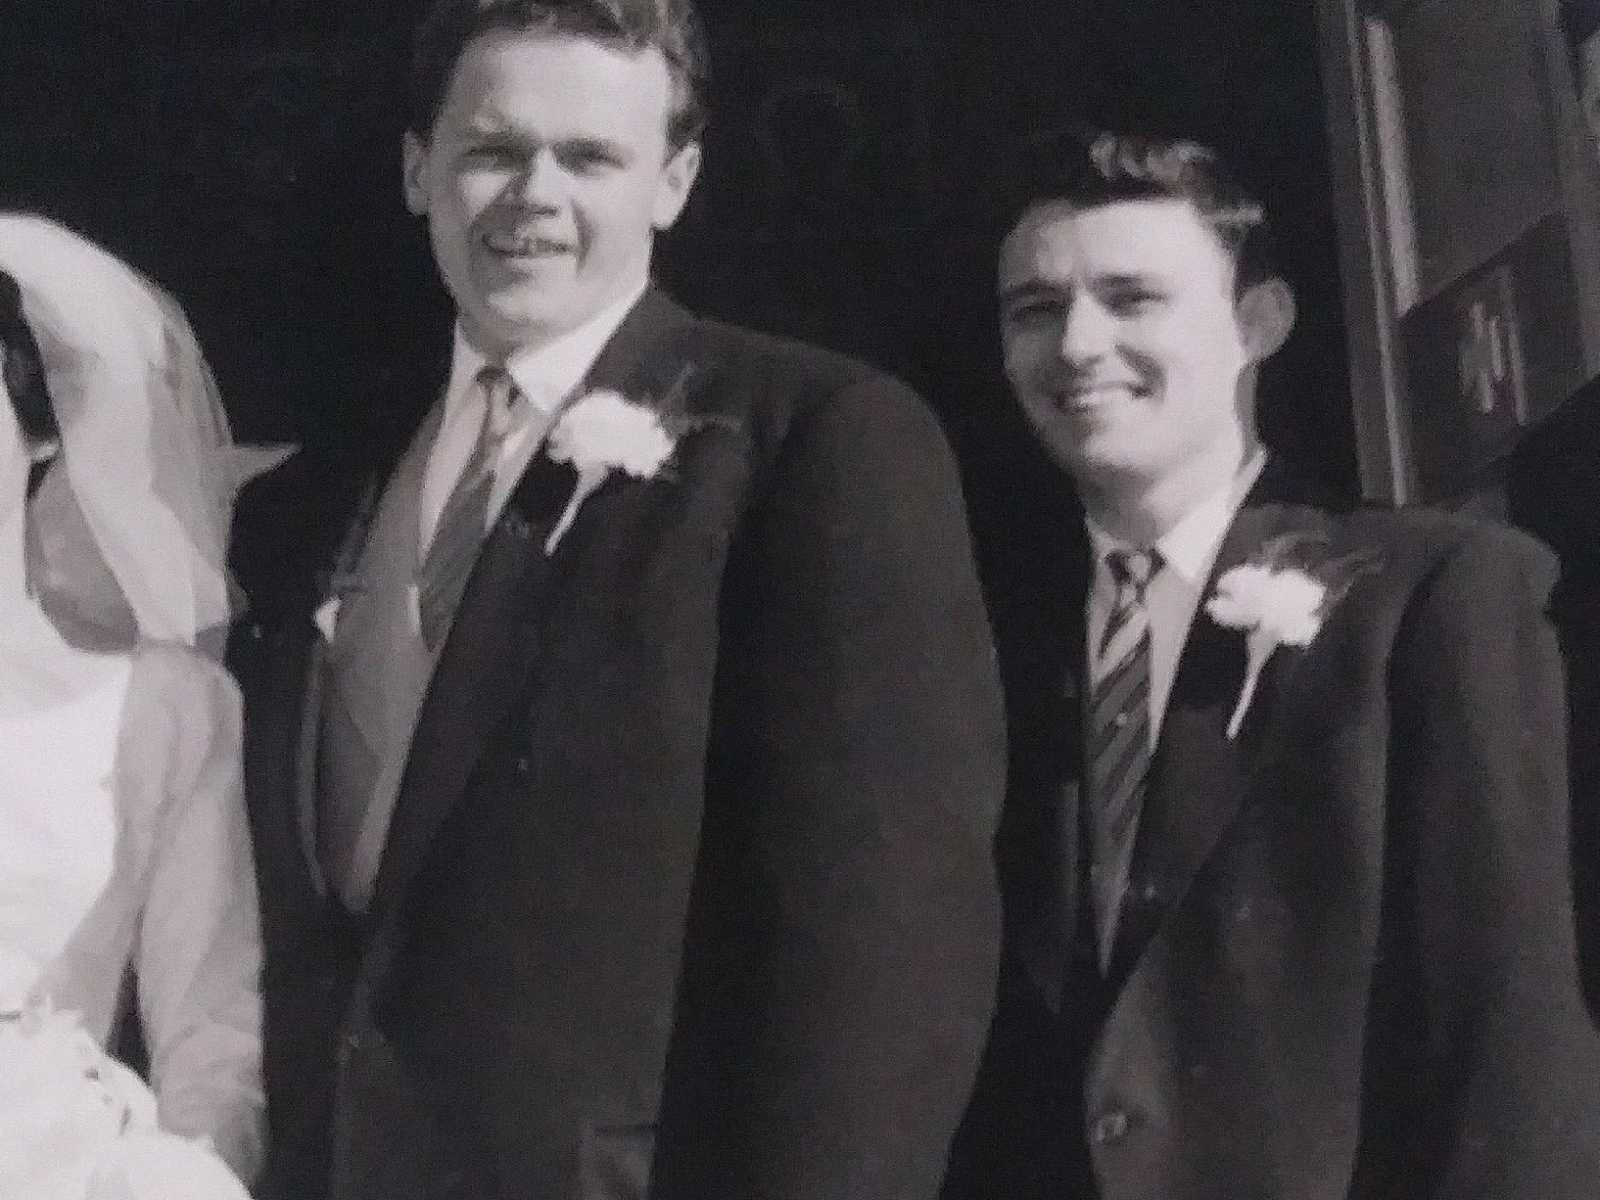 Groom standing beside best man who is his best friend at wedding 